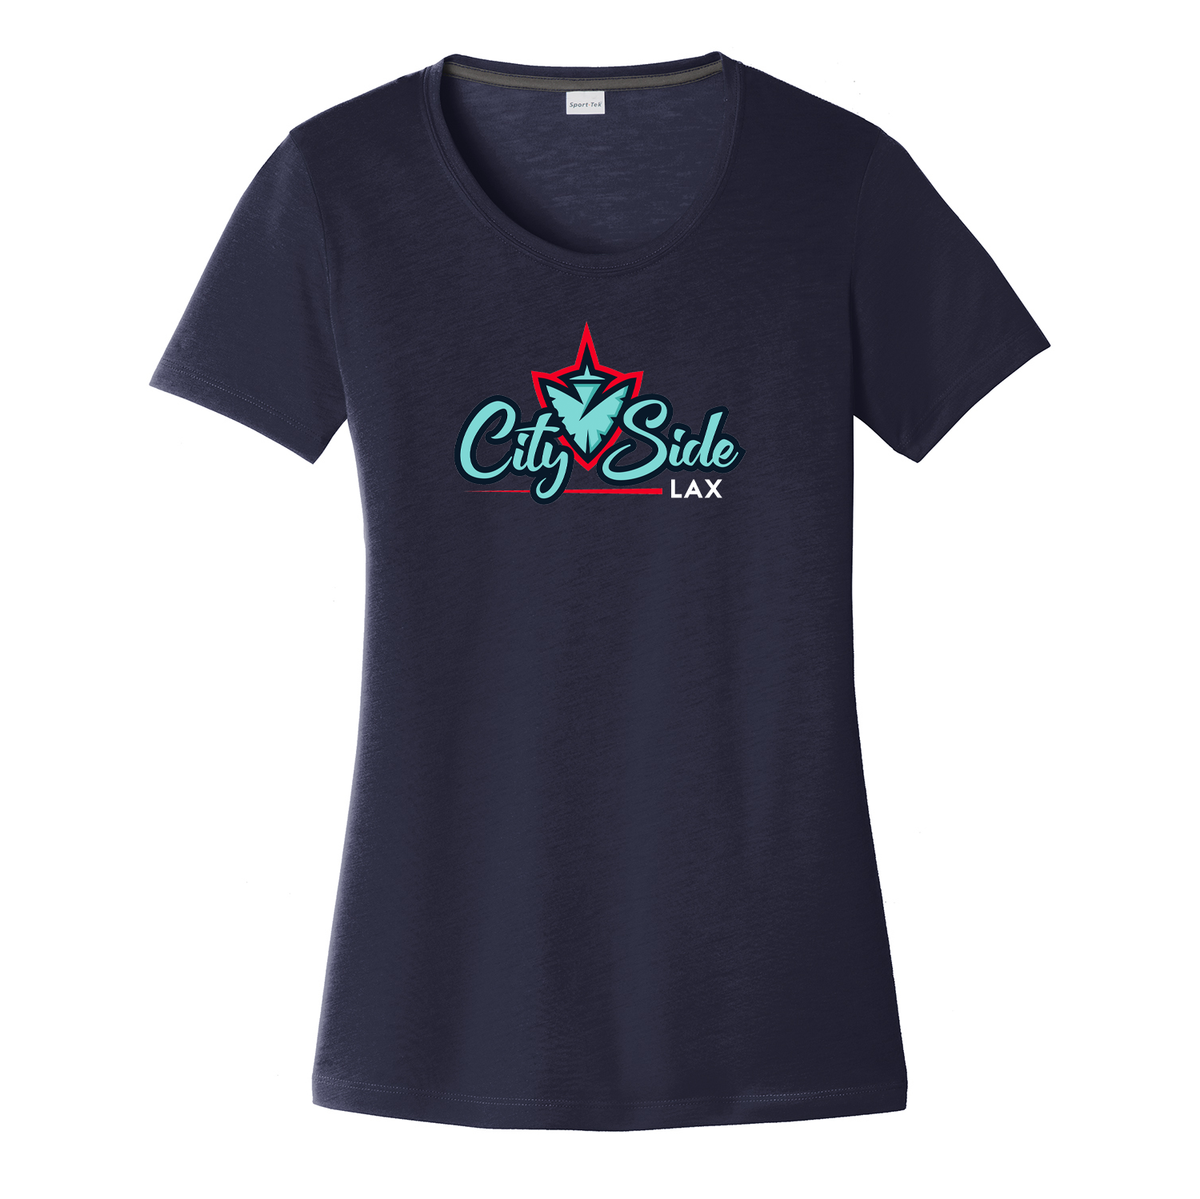 CitySide Lacrosse Women's CottonTouch Performance T-Shirt